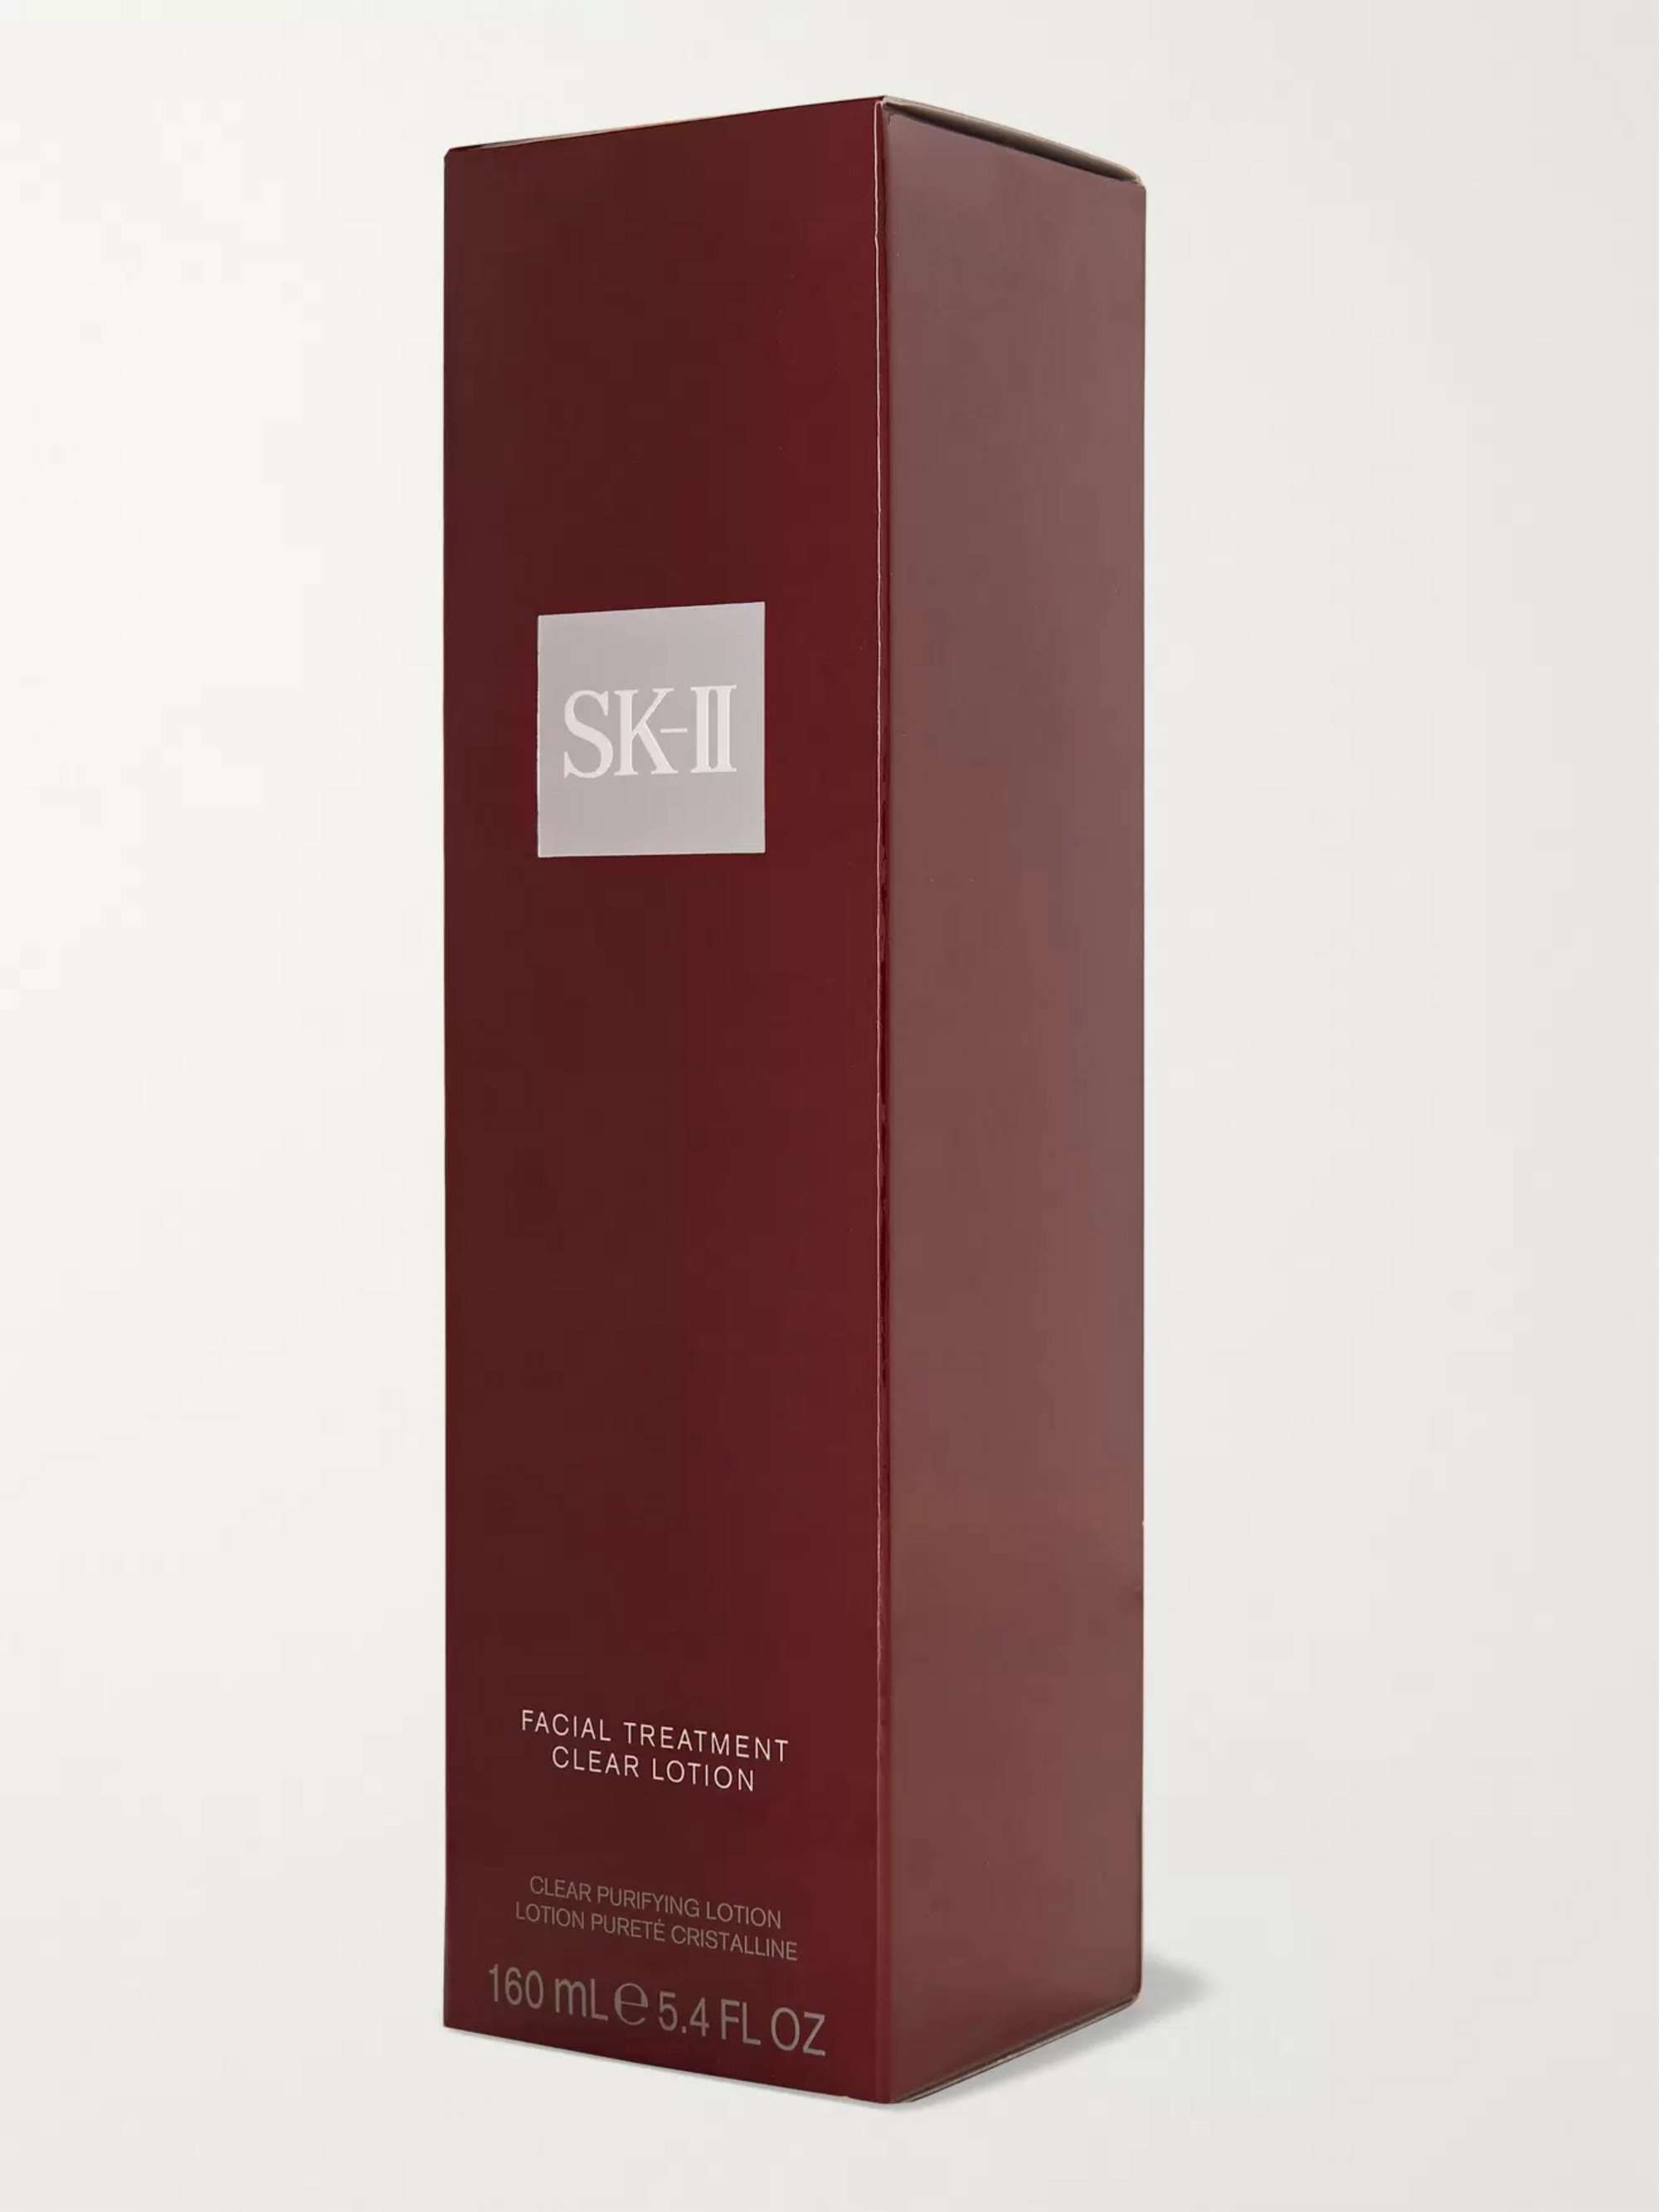 SK-II Facial Treatment Clear Lotion, 160ml